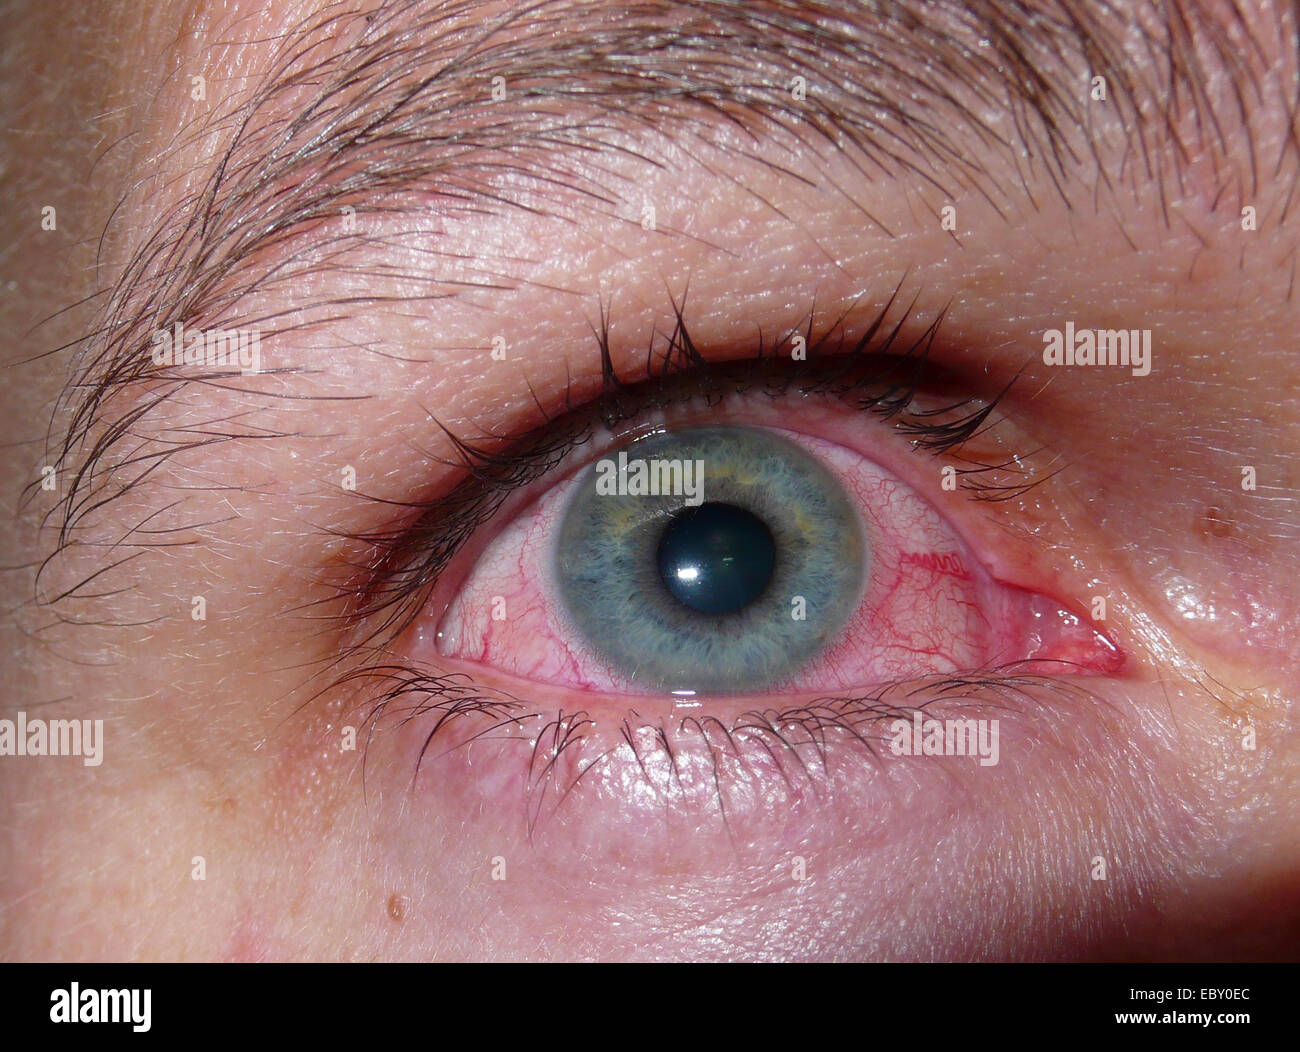 eye of a man with allergic coryza Stock Photo